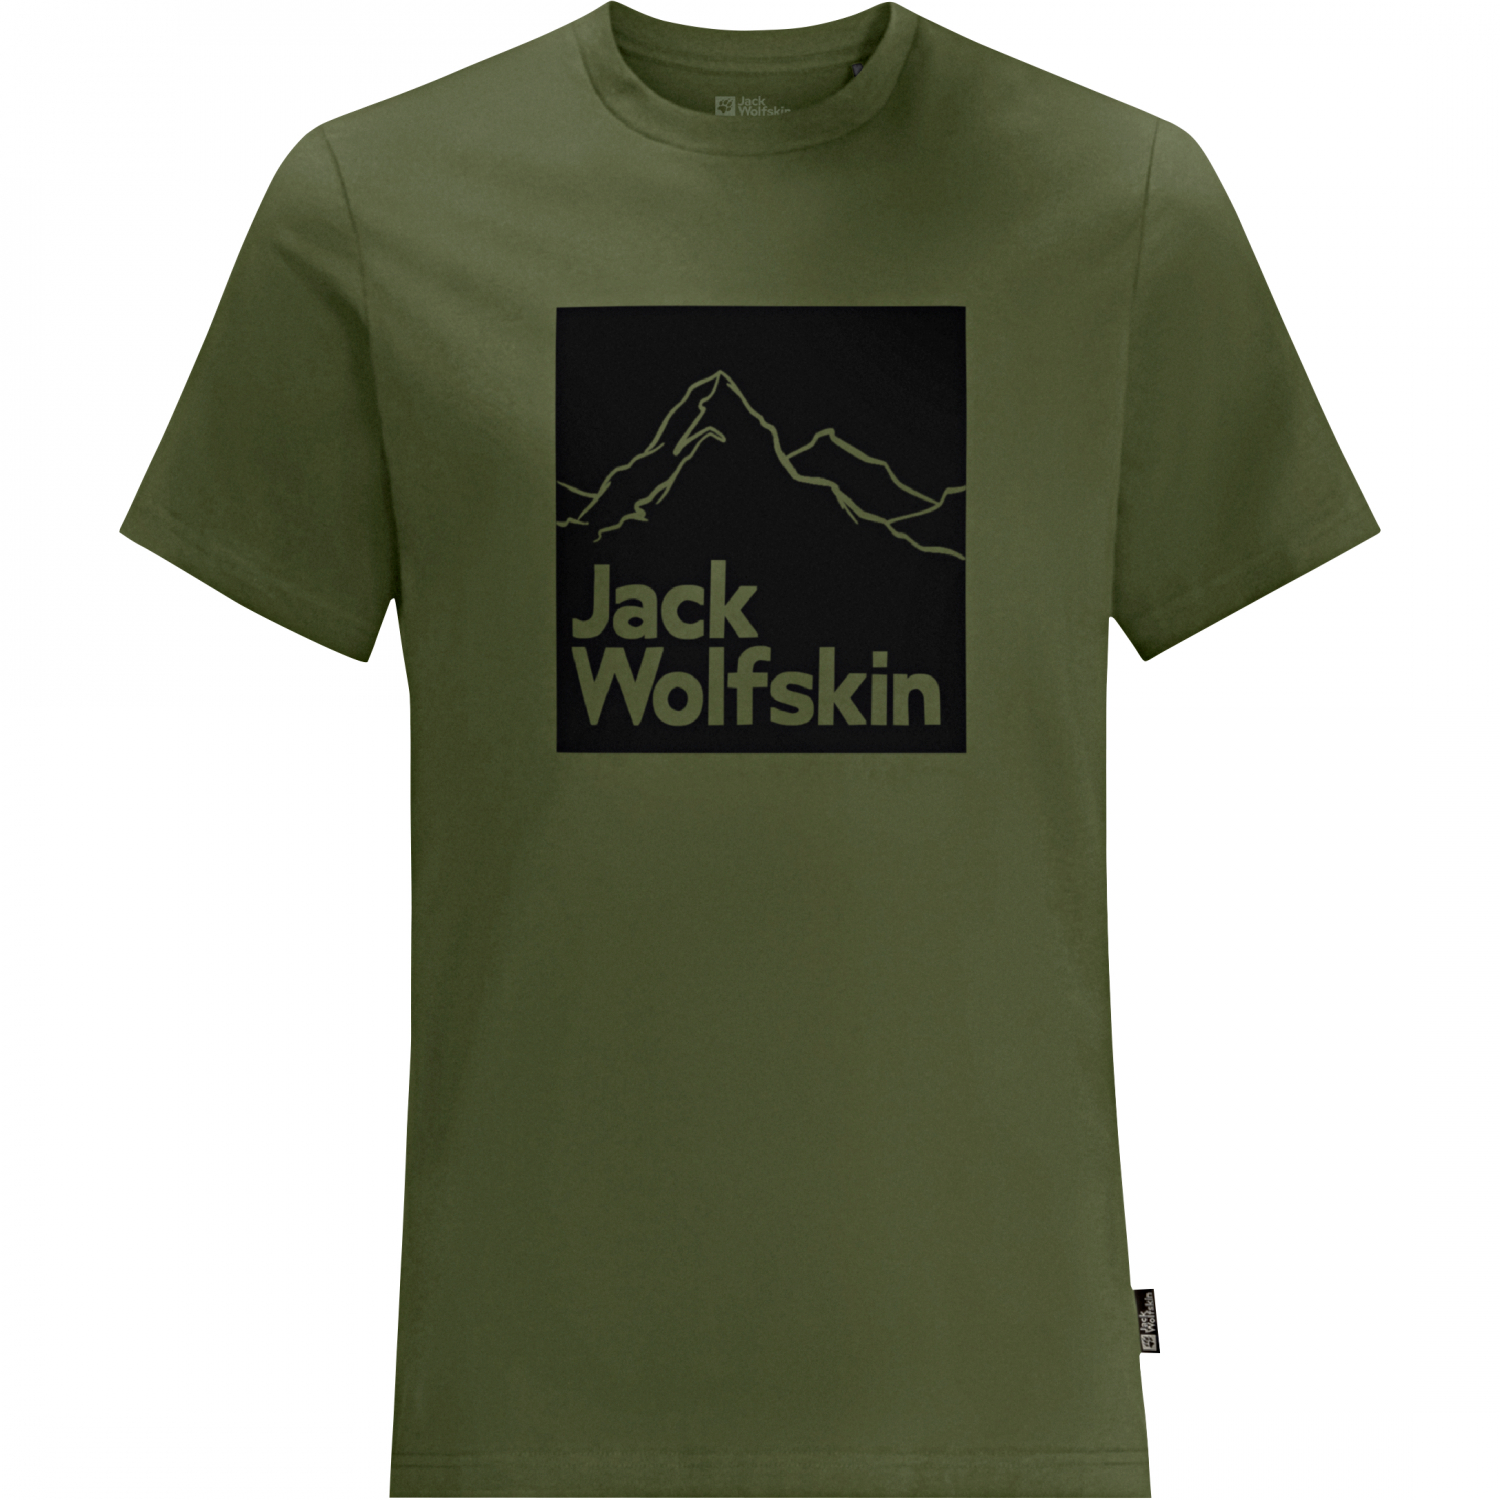 Jack Wolfskin Mens Shirt Brand T M at low prices | Askari Hunting Shop